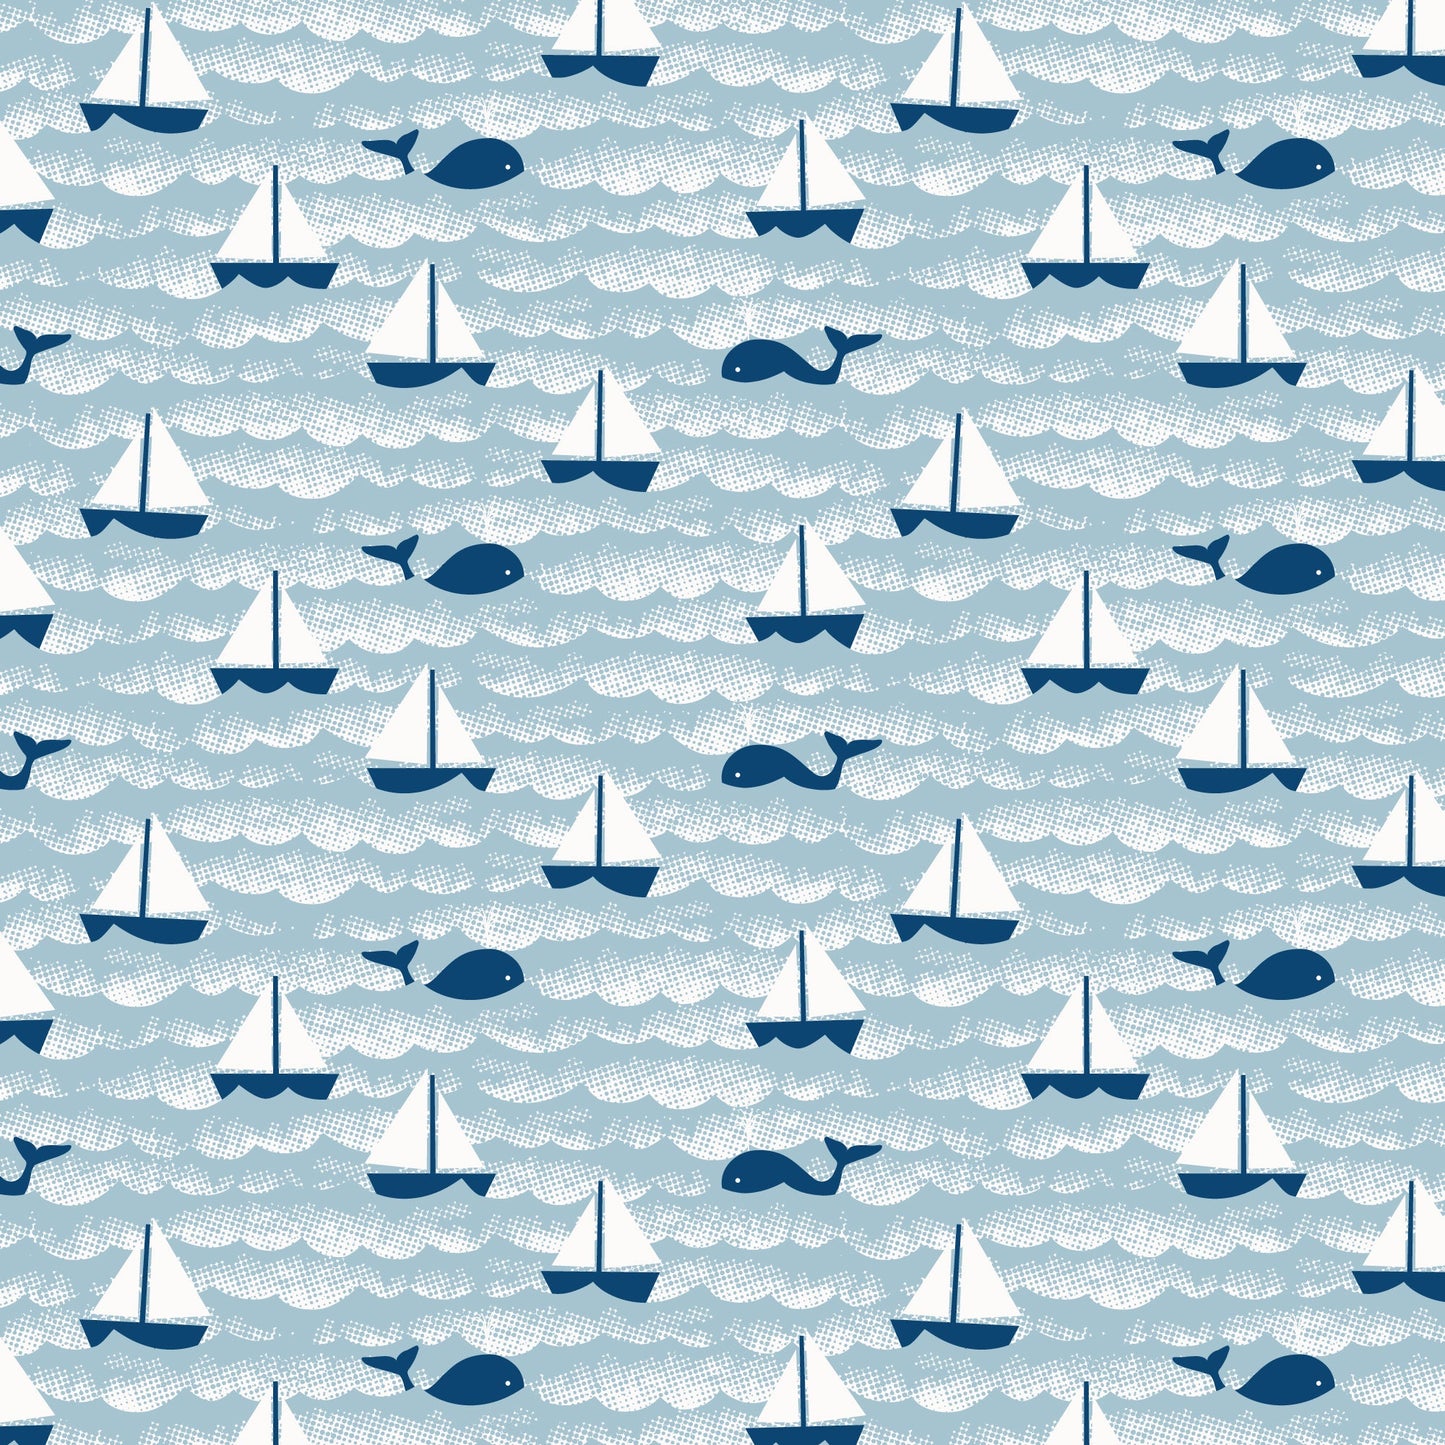 Valencia Dress - Sailboats Ocean Blue & Navy